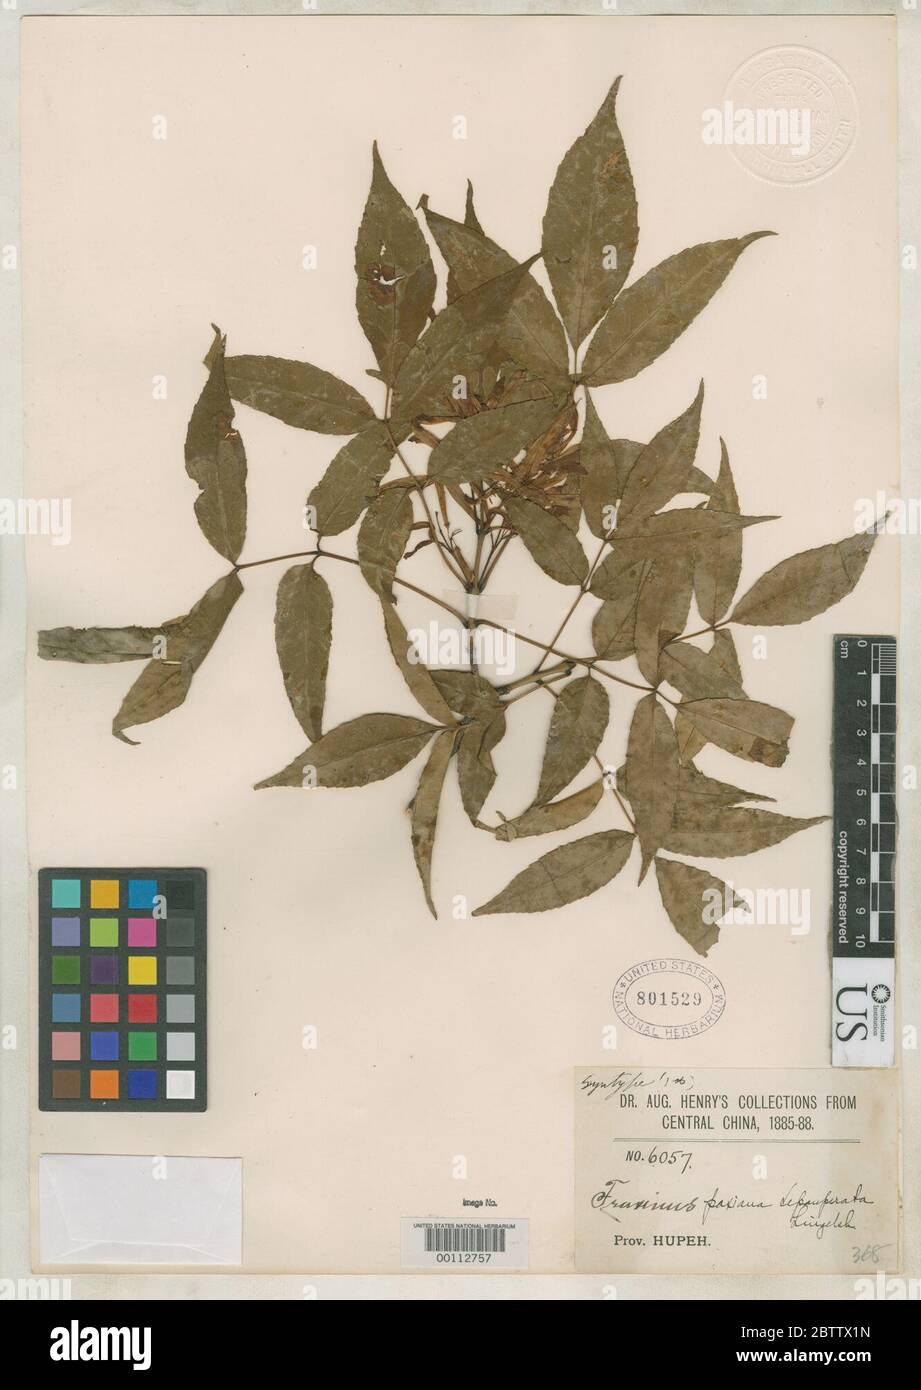 Fraxinus paxiana var depauperata Lingelsh in Engl. Stock Photo